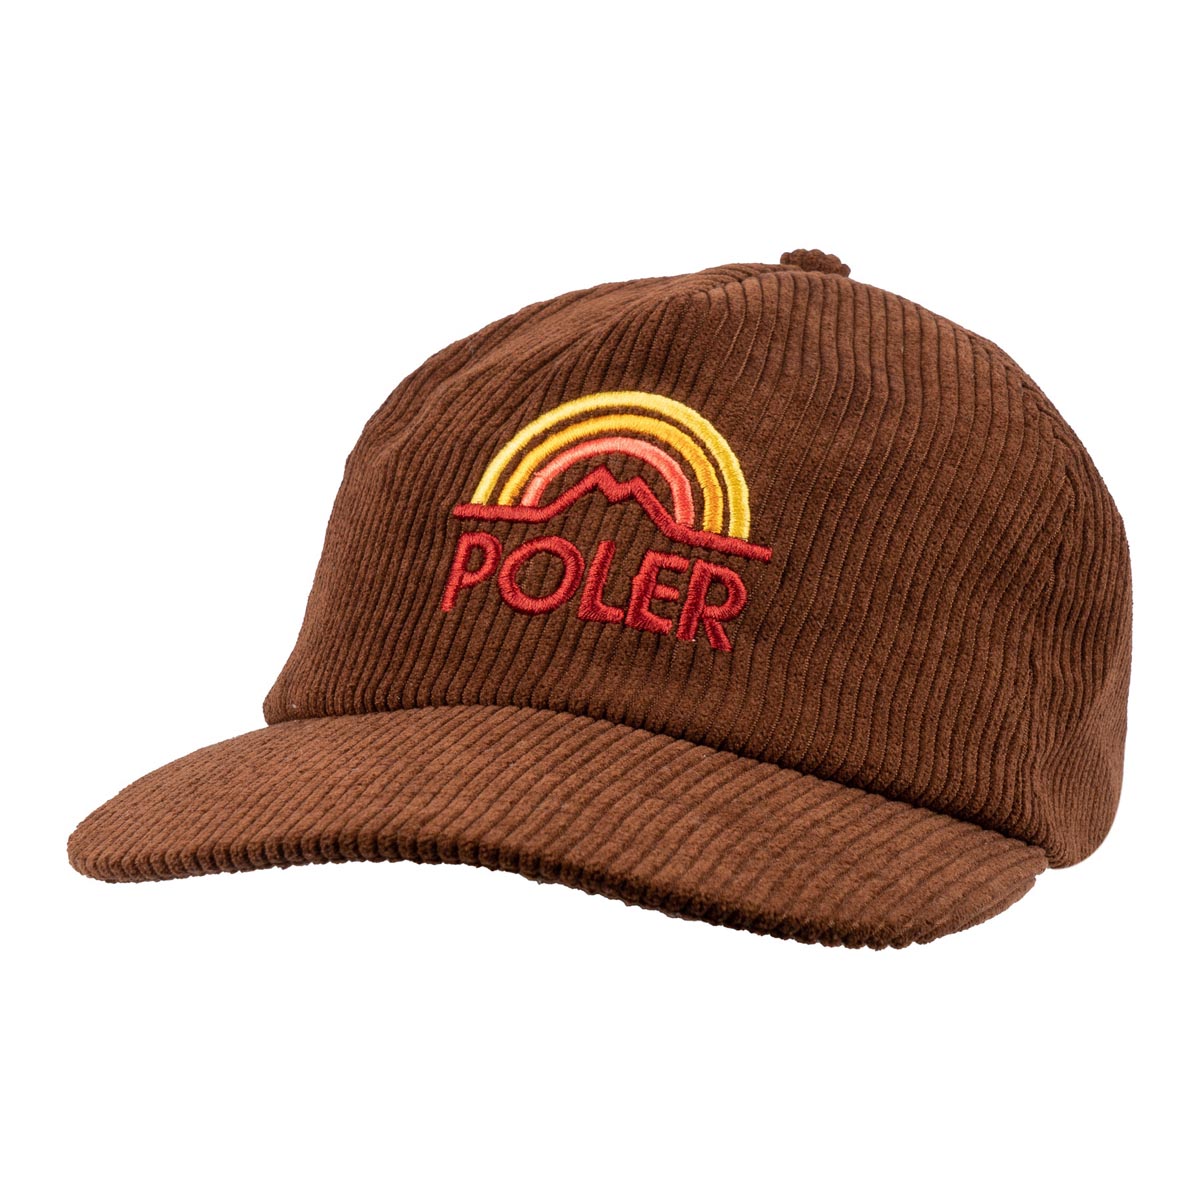 Poler Mtn Rainbow Hat - Brown image 1